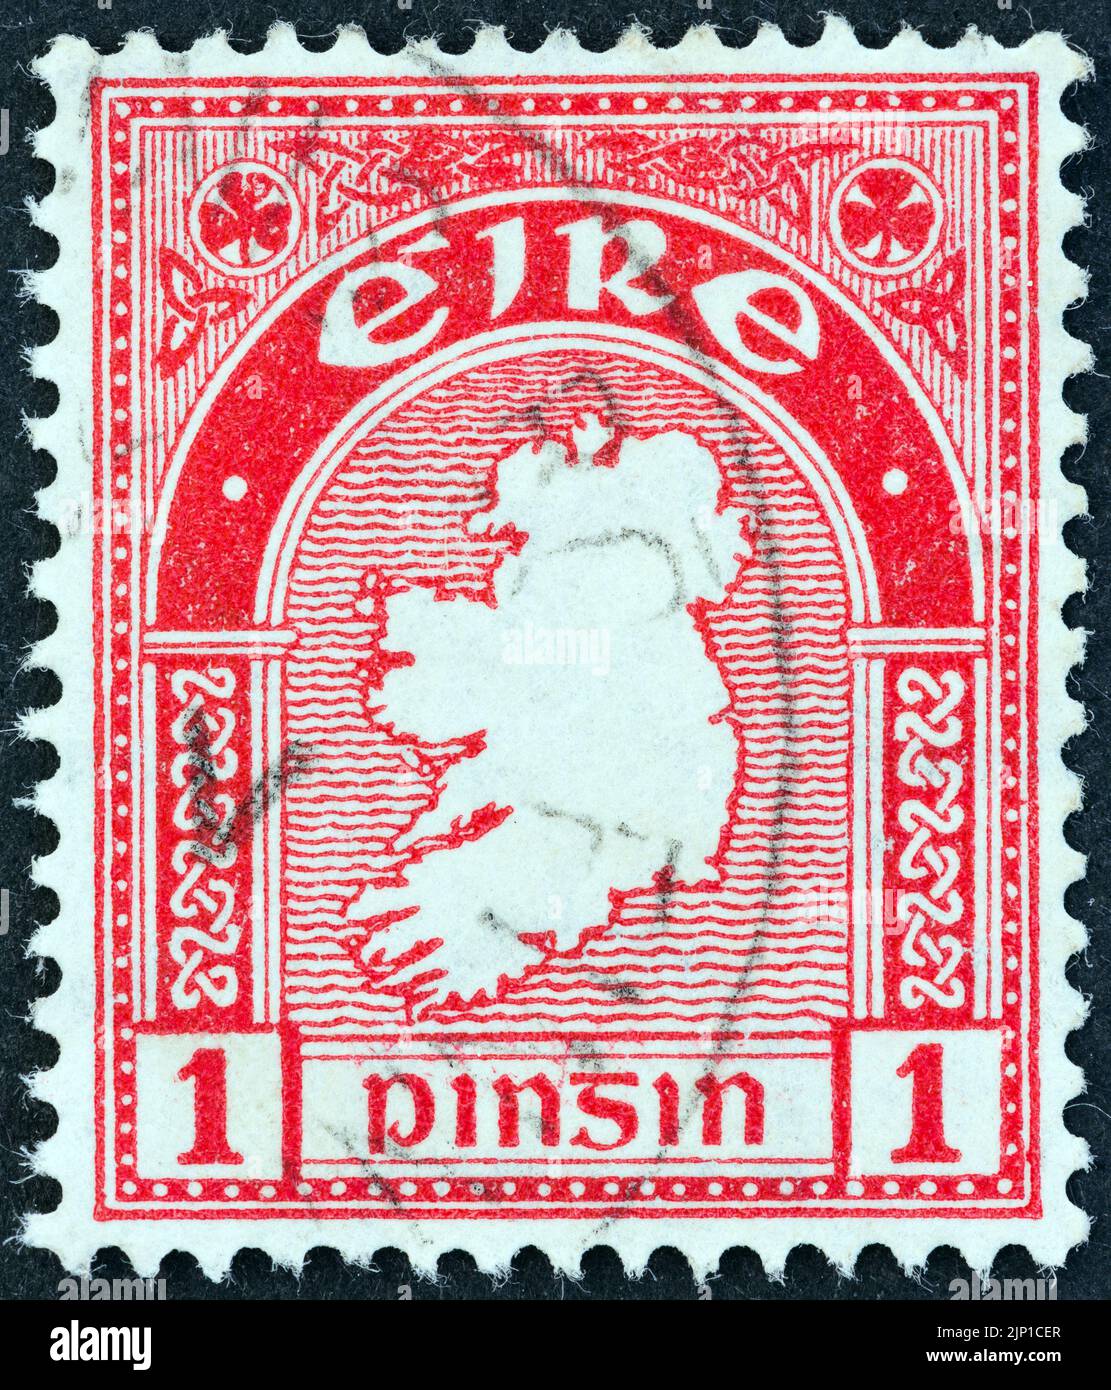 IRELAND - CIRCA 1922: A stamp printed in Ireland shows Map of Ireland, circa 1922. Stock Photo